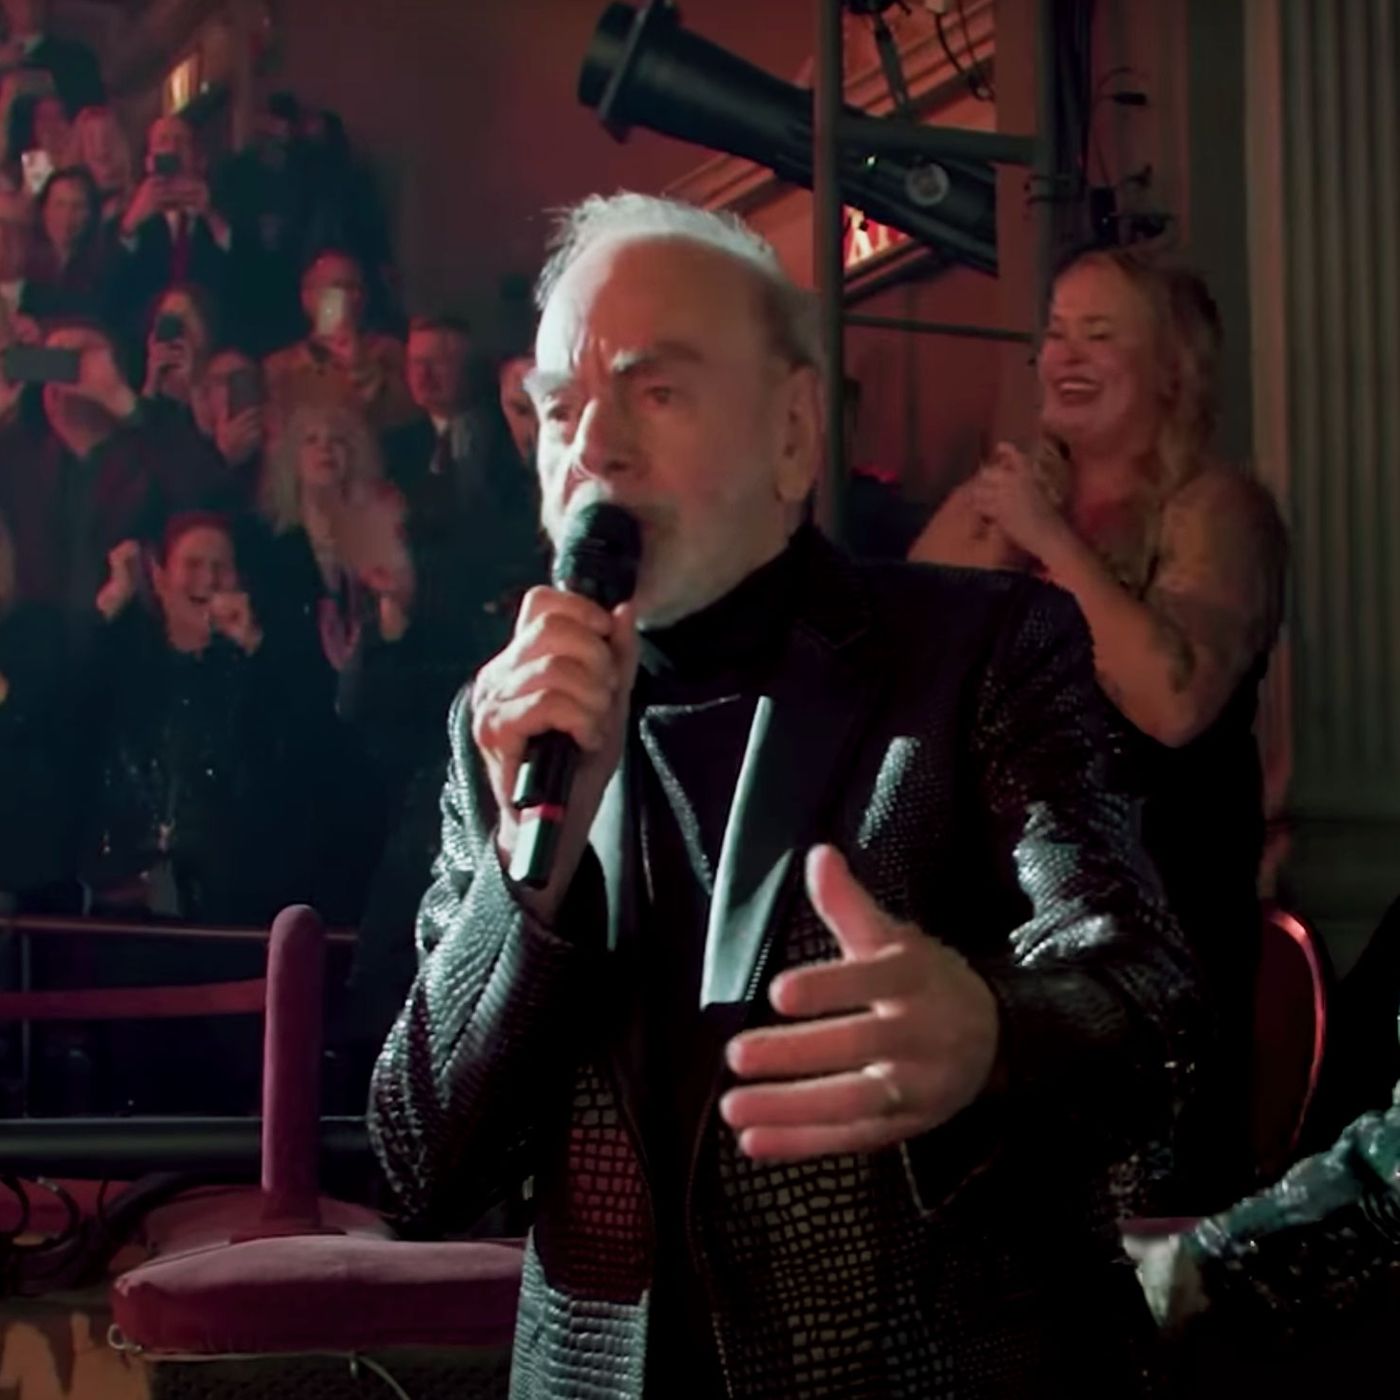 Neil Diamond gives surprise 'Sweet Caroline' performance